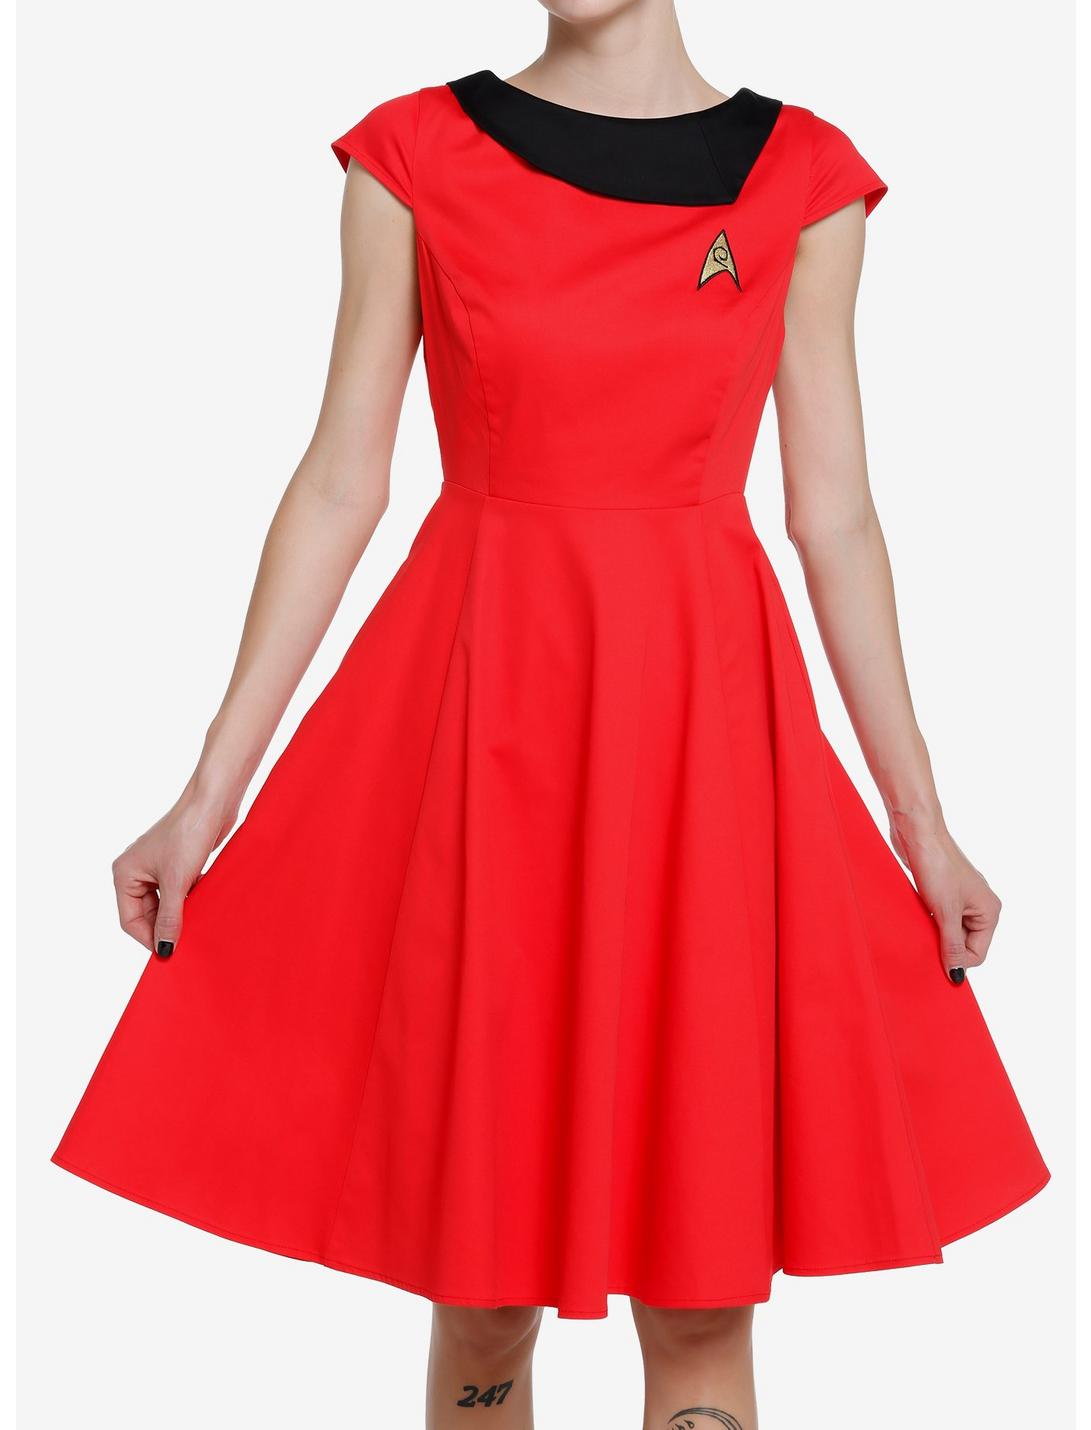 Her Universe Star Trek Red Uniform Retro Dress Her Universe Exclusive, RED, hi-res